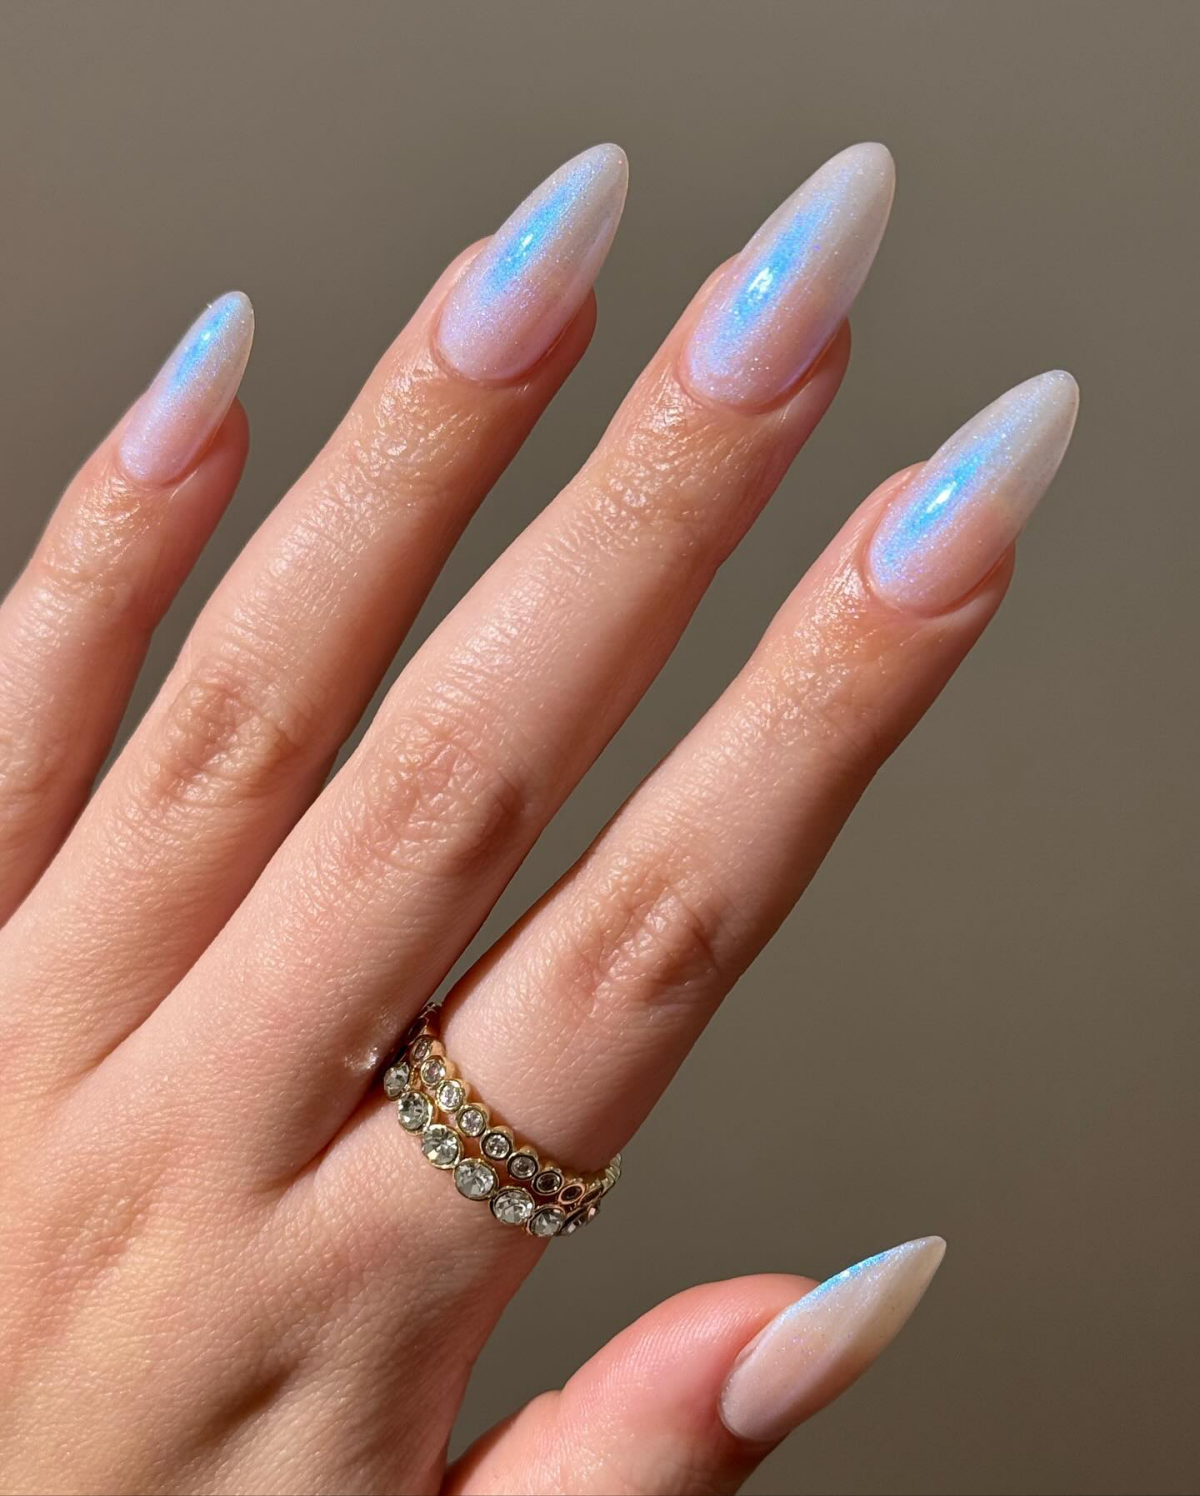 shiny glazed nails